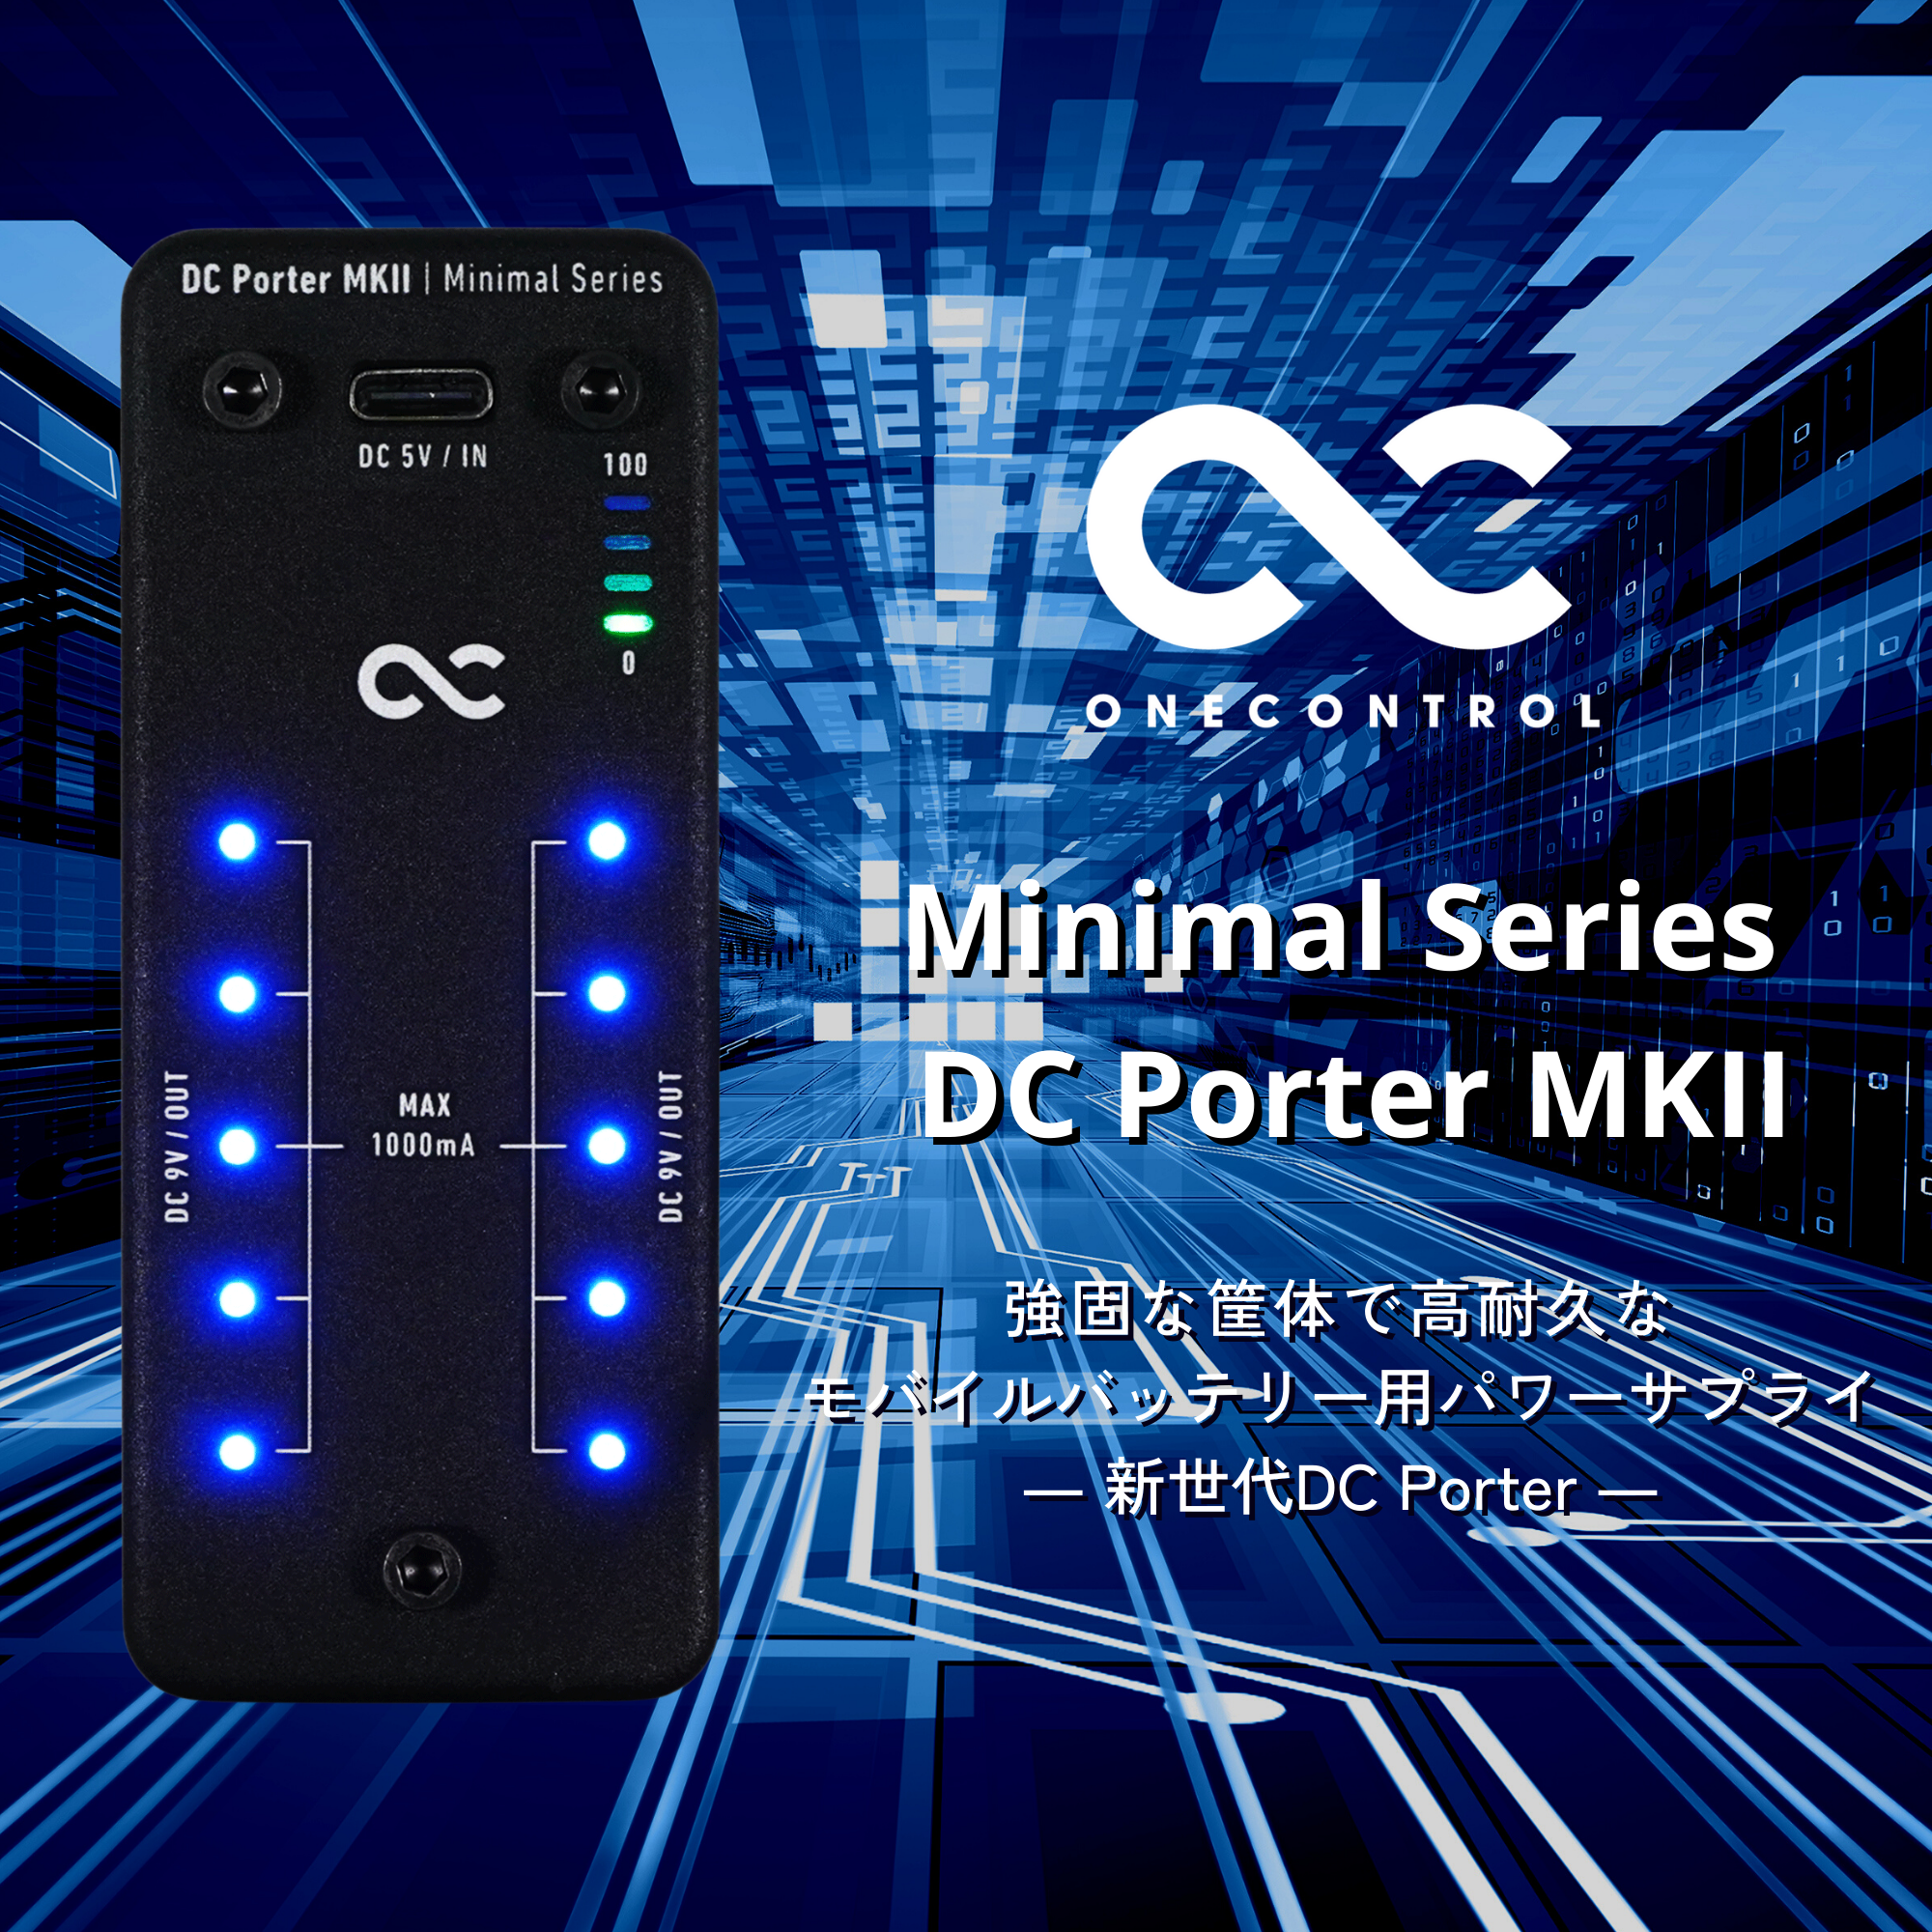 One Control Minimal Series DC Porter MKII